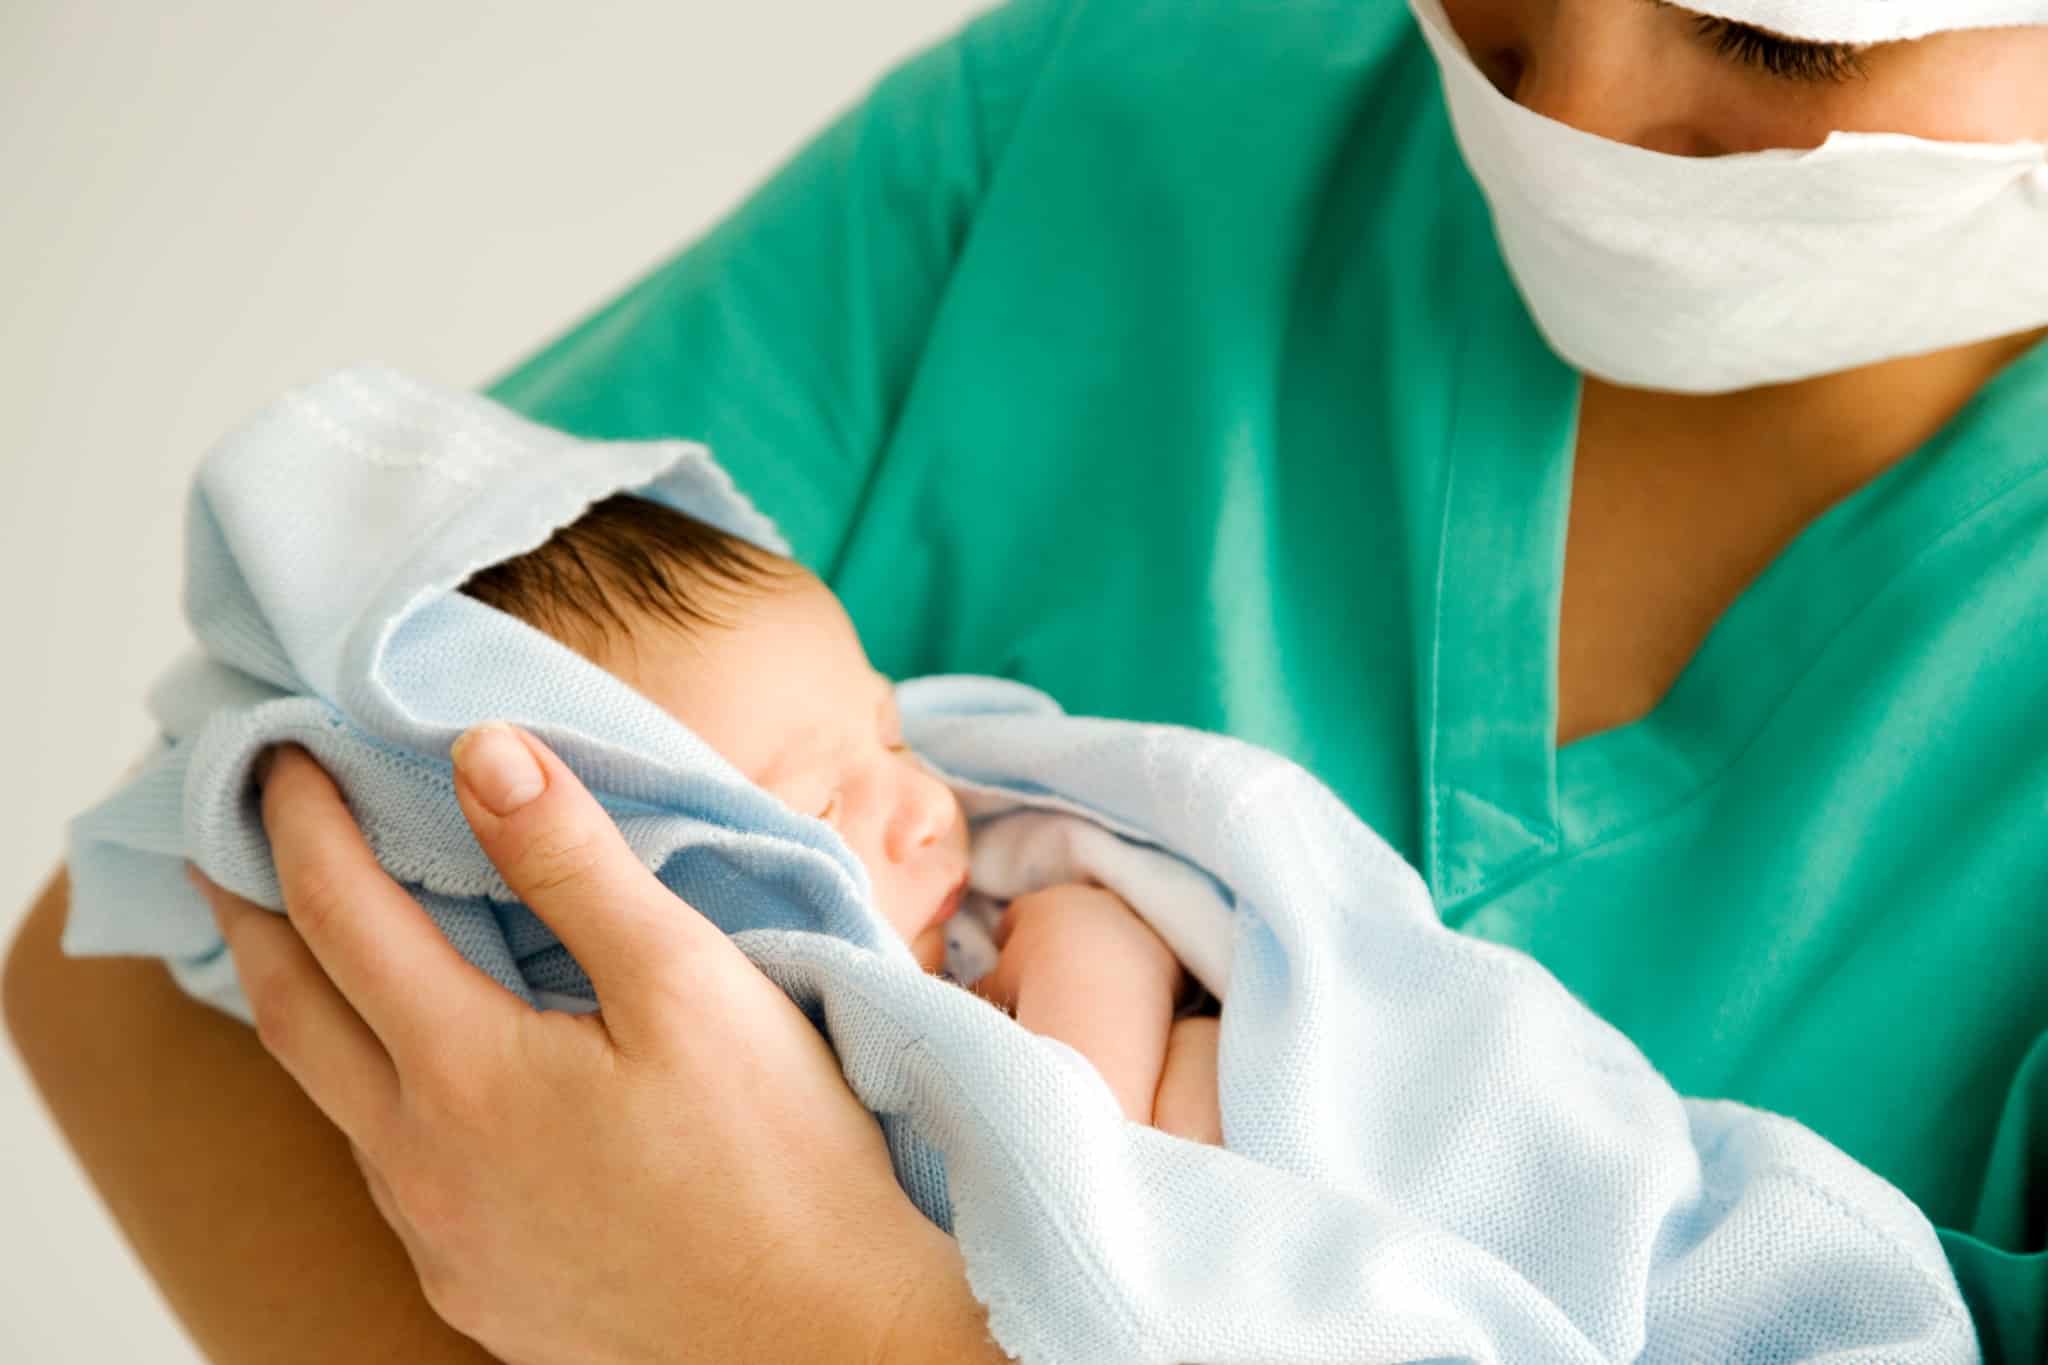 Maternity nurse holding a newborn baby